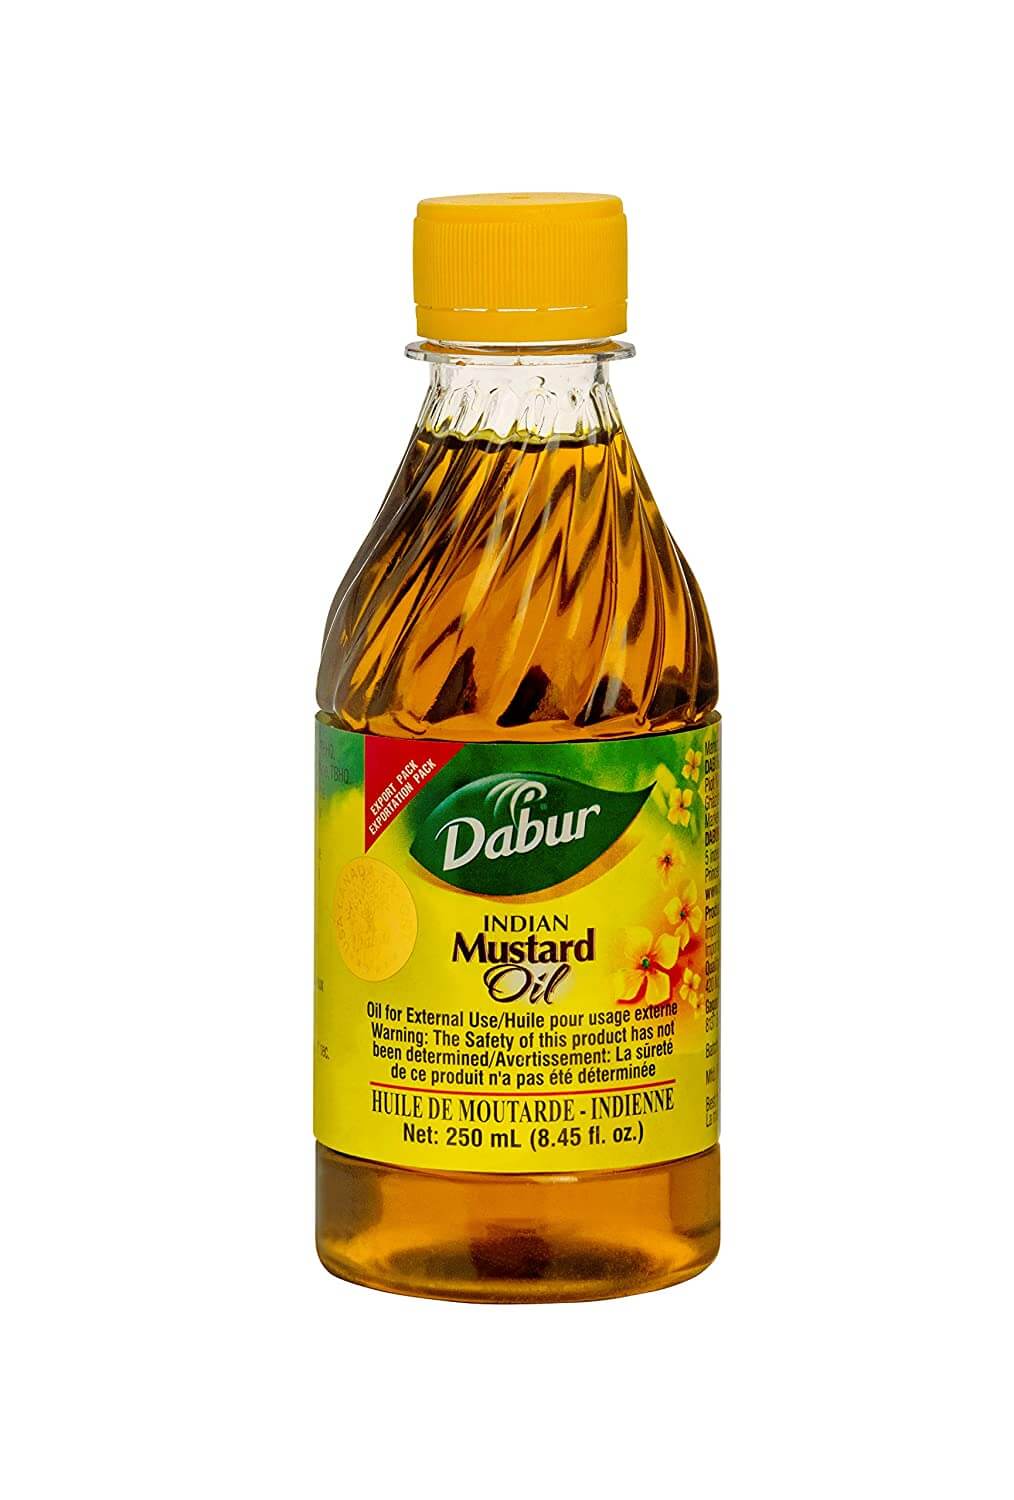 Dabur mustard oil